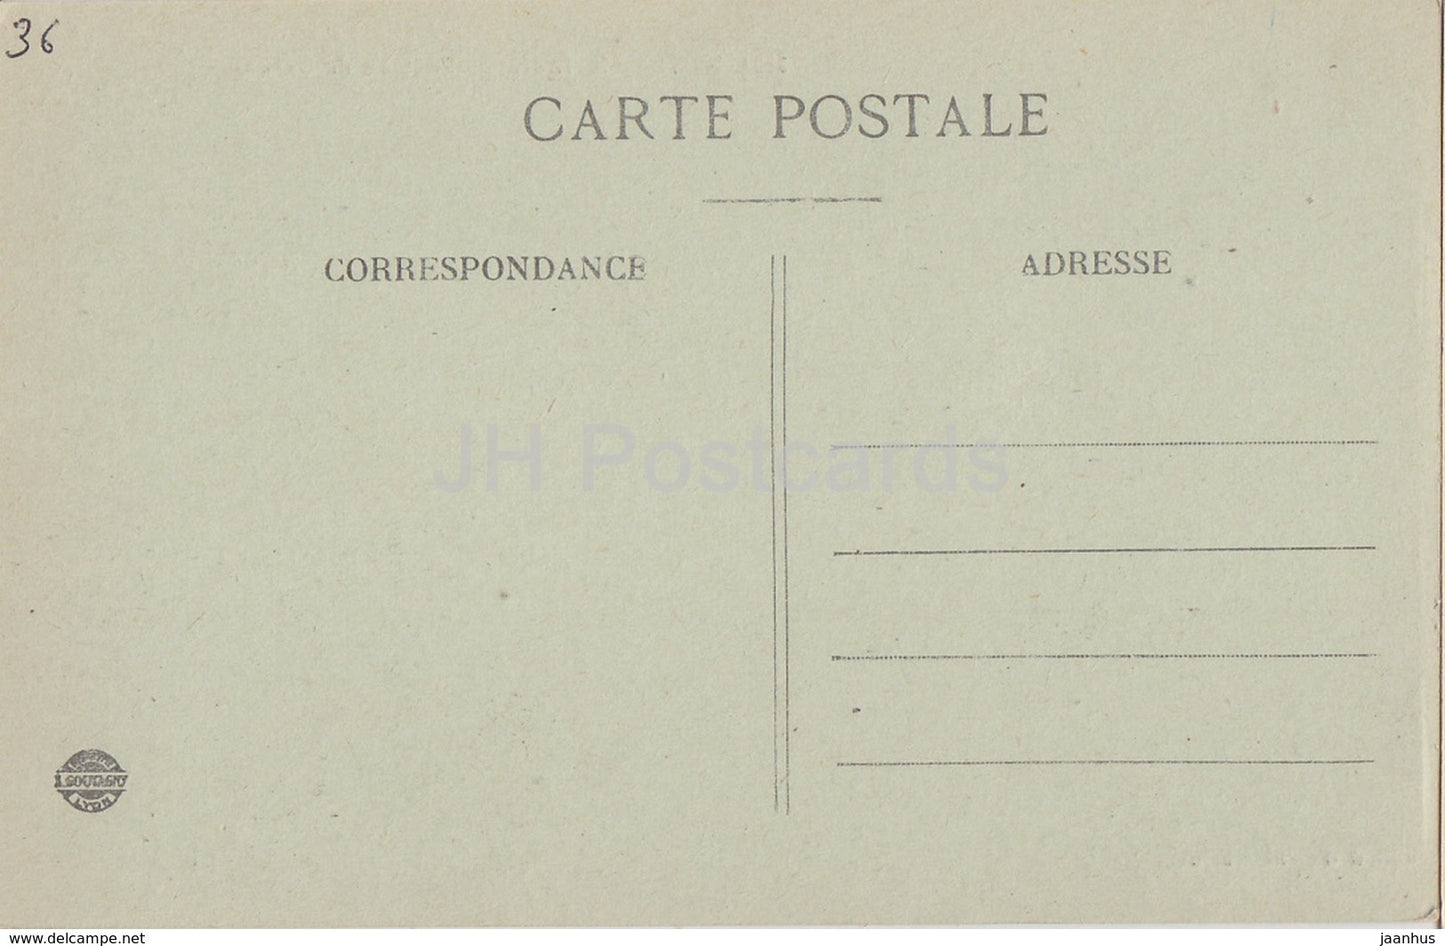 Niherne - Chateau de Rancay - Schloss - 3323 - alte Postkarte - Frankreich - unbenutzt